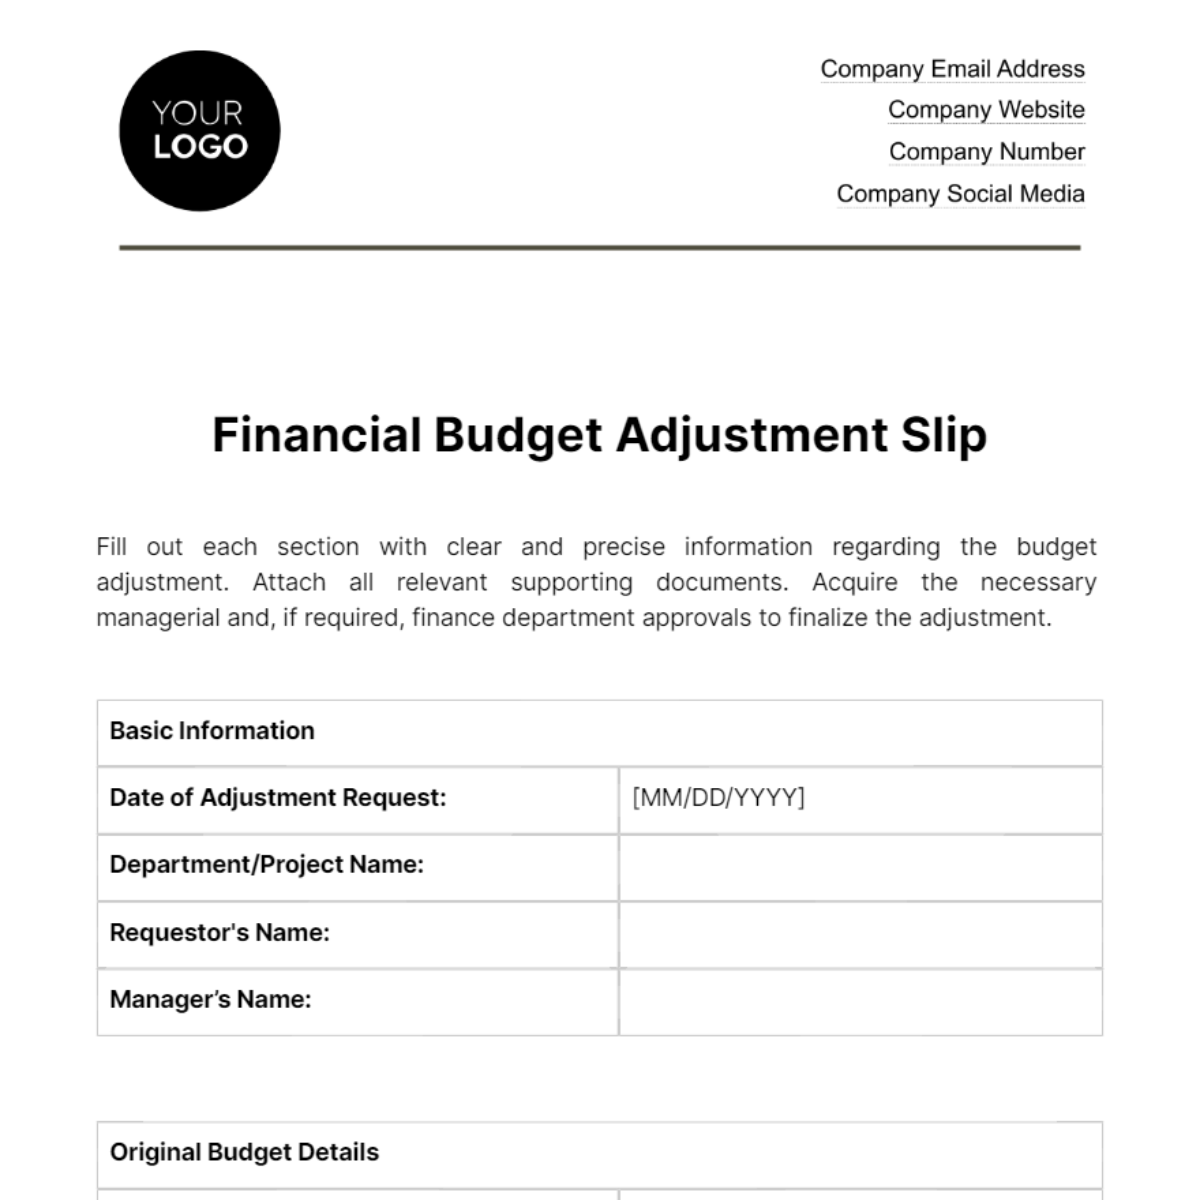 Financial Budget Adjustment Slip Template